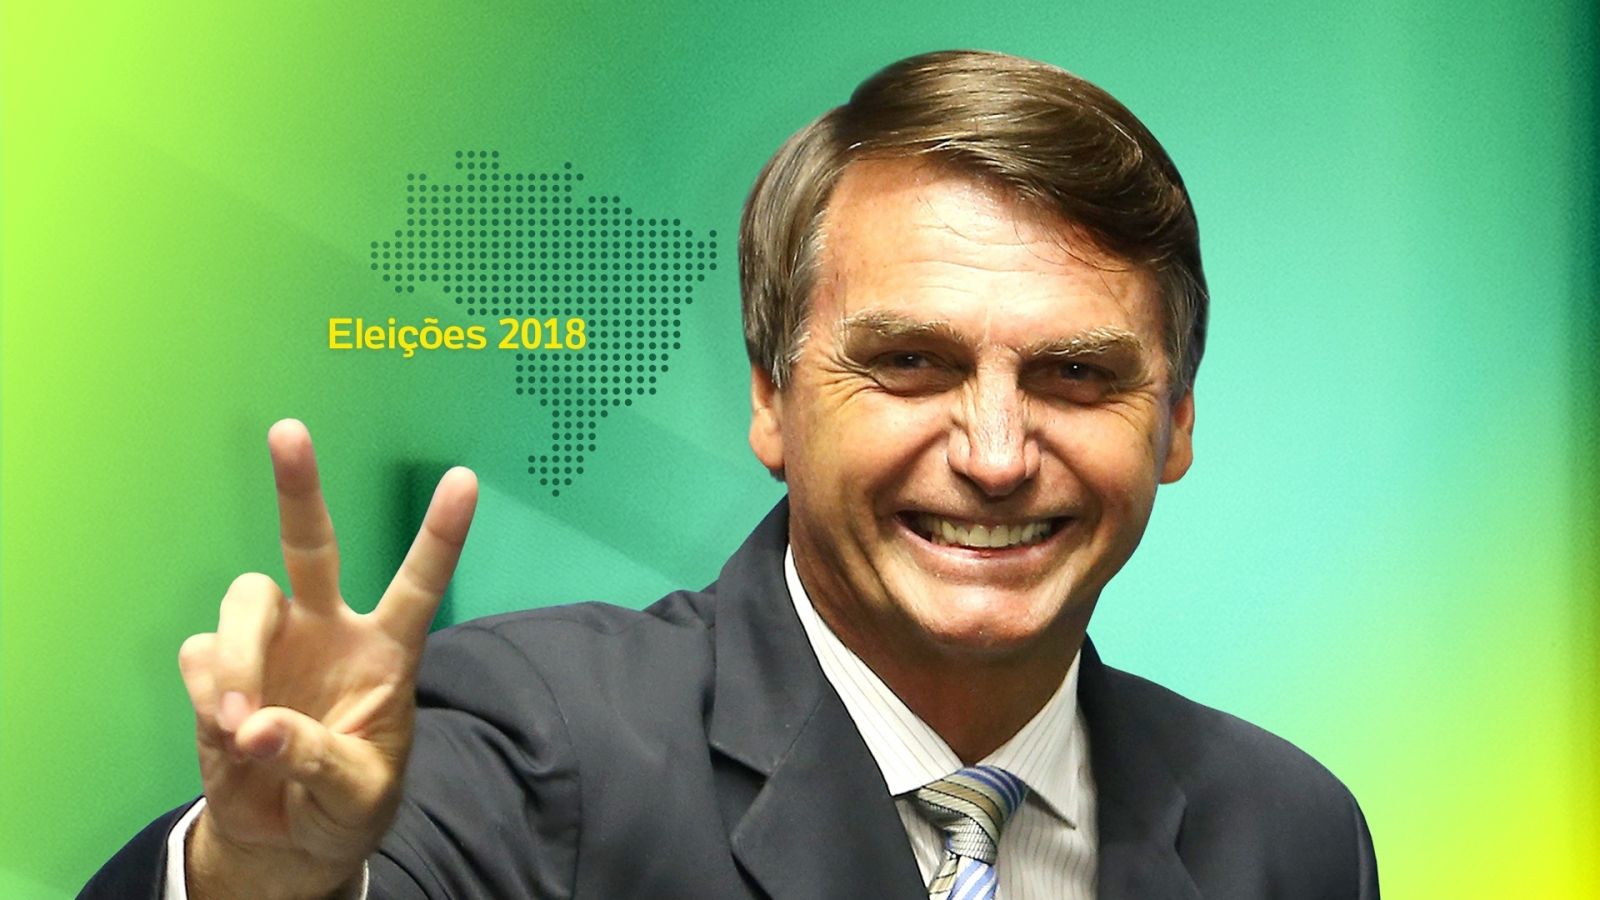 Mano dura para gobernar promete Jair Bolsonaro el nuevo presidente de Brasil 